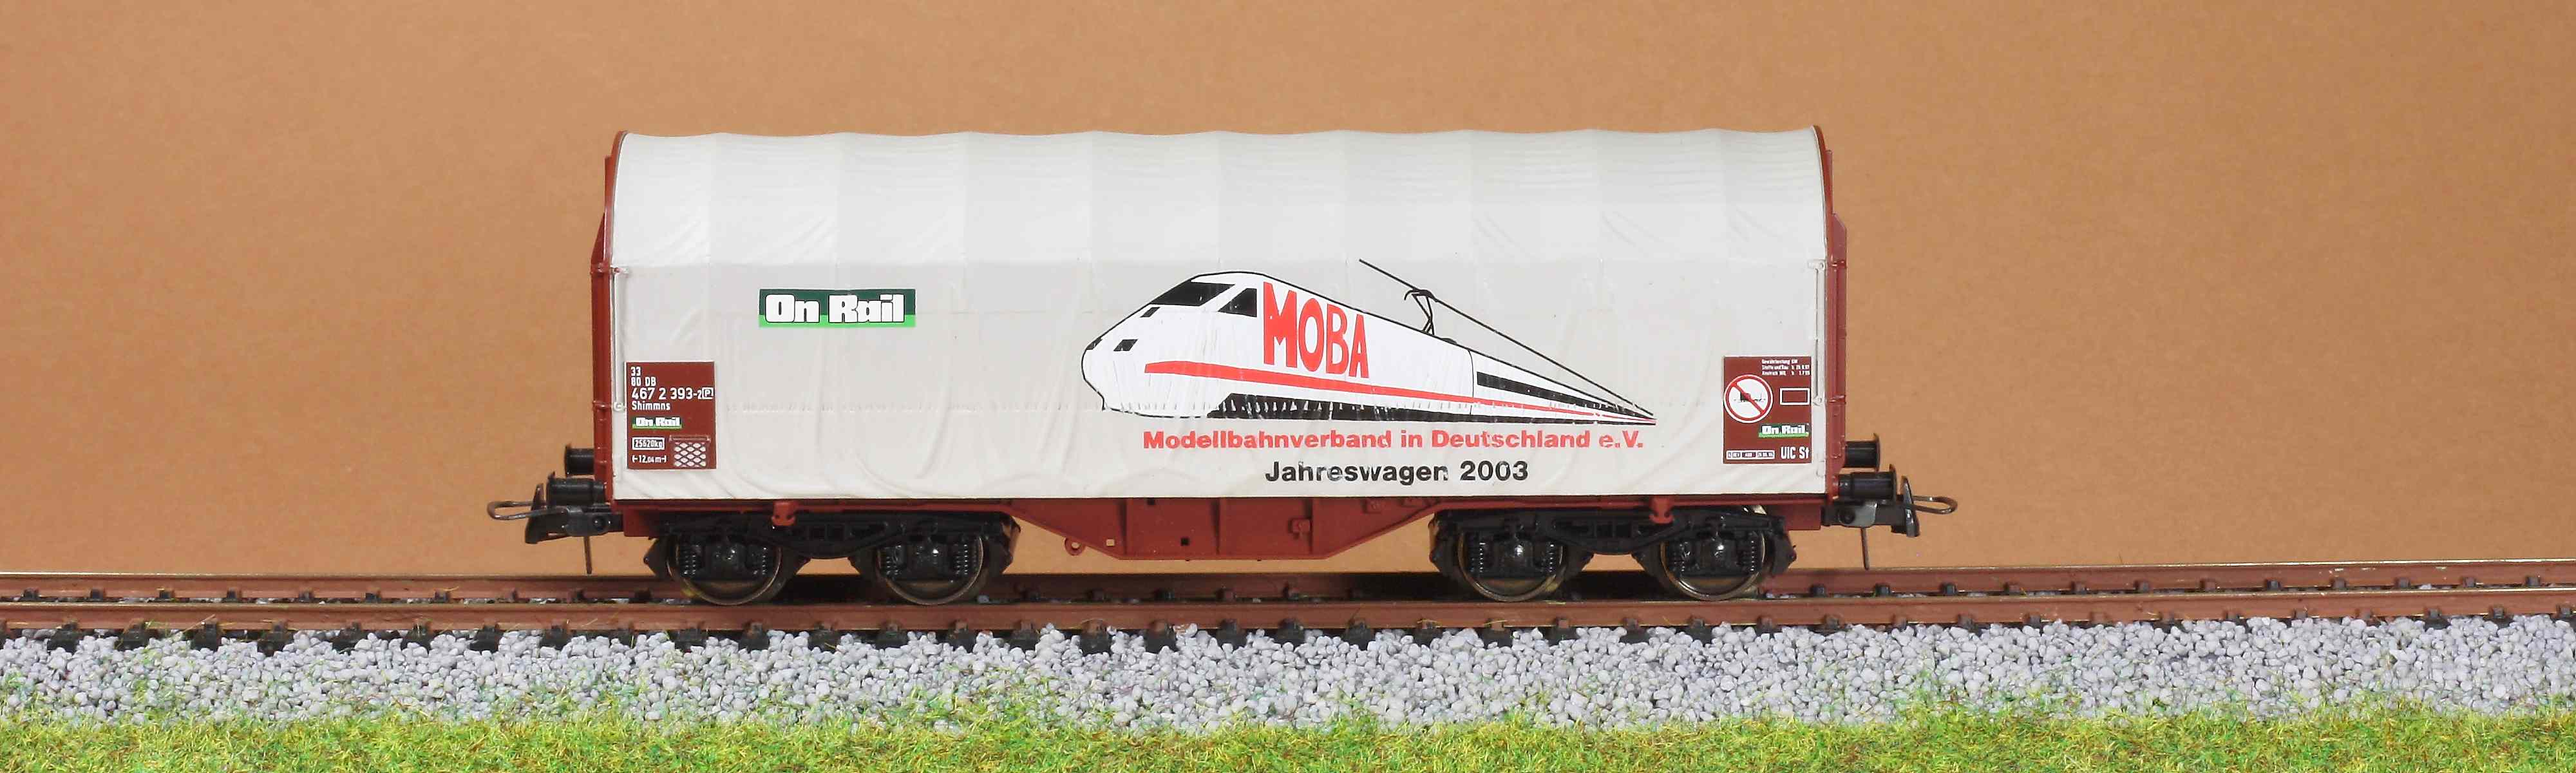 jahreswagen-2003-roco-img_3837-edh-optimised